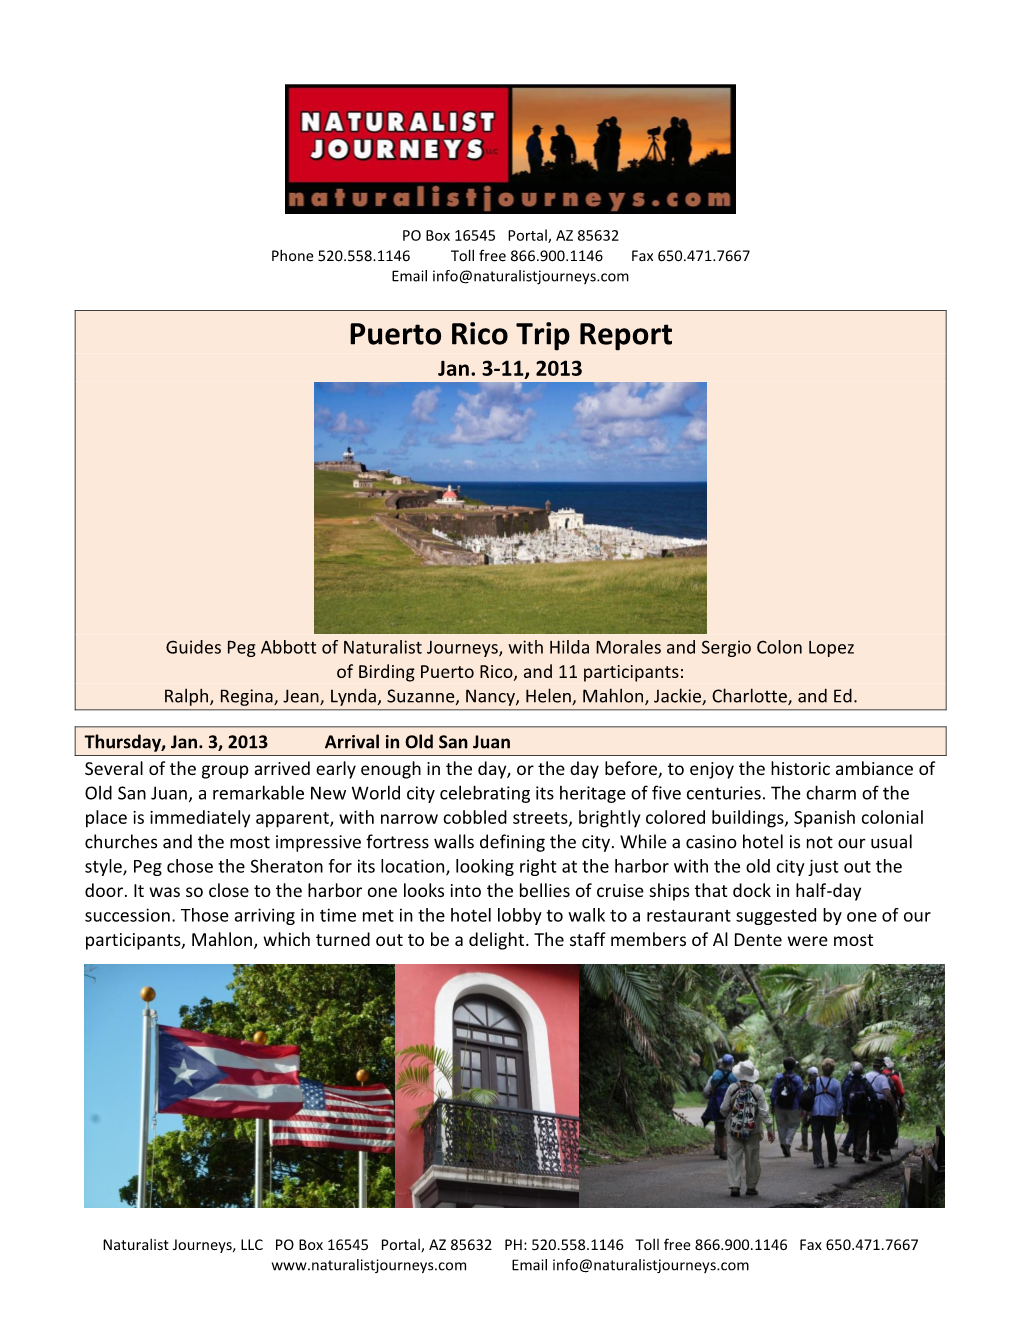 Puerto Rico Trip Report Jan